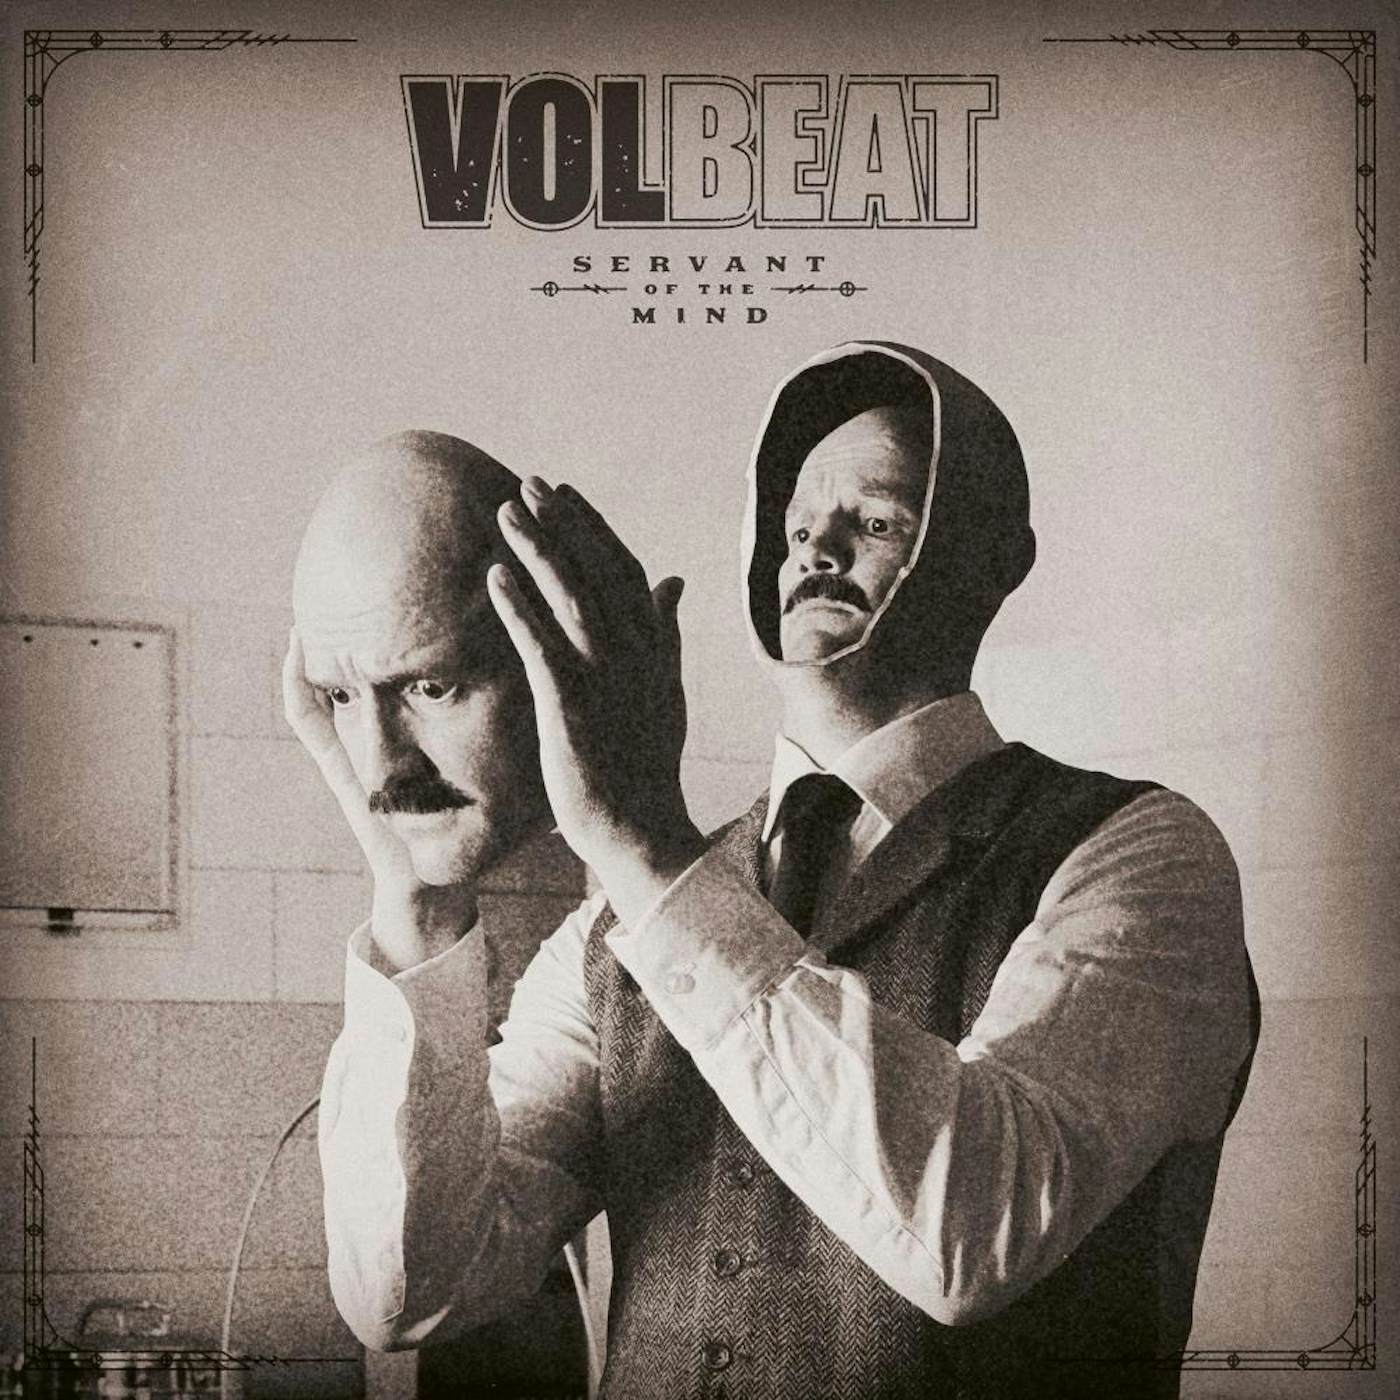 Volbeat SERVANT OF THE MIND CD